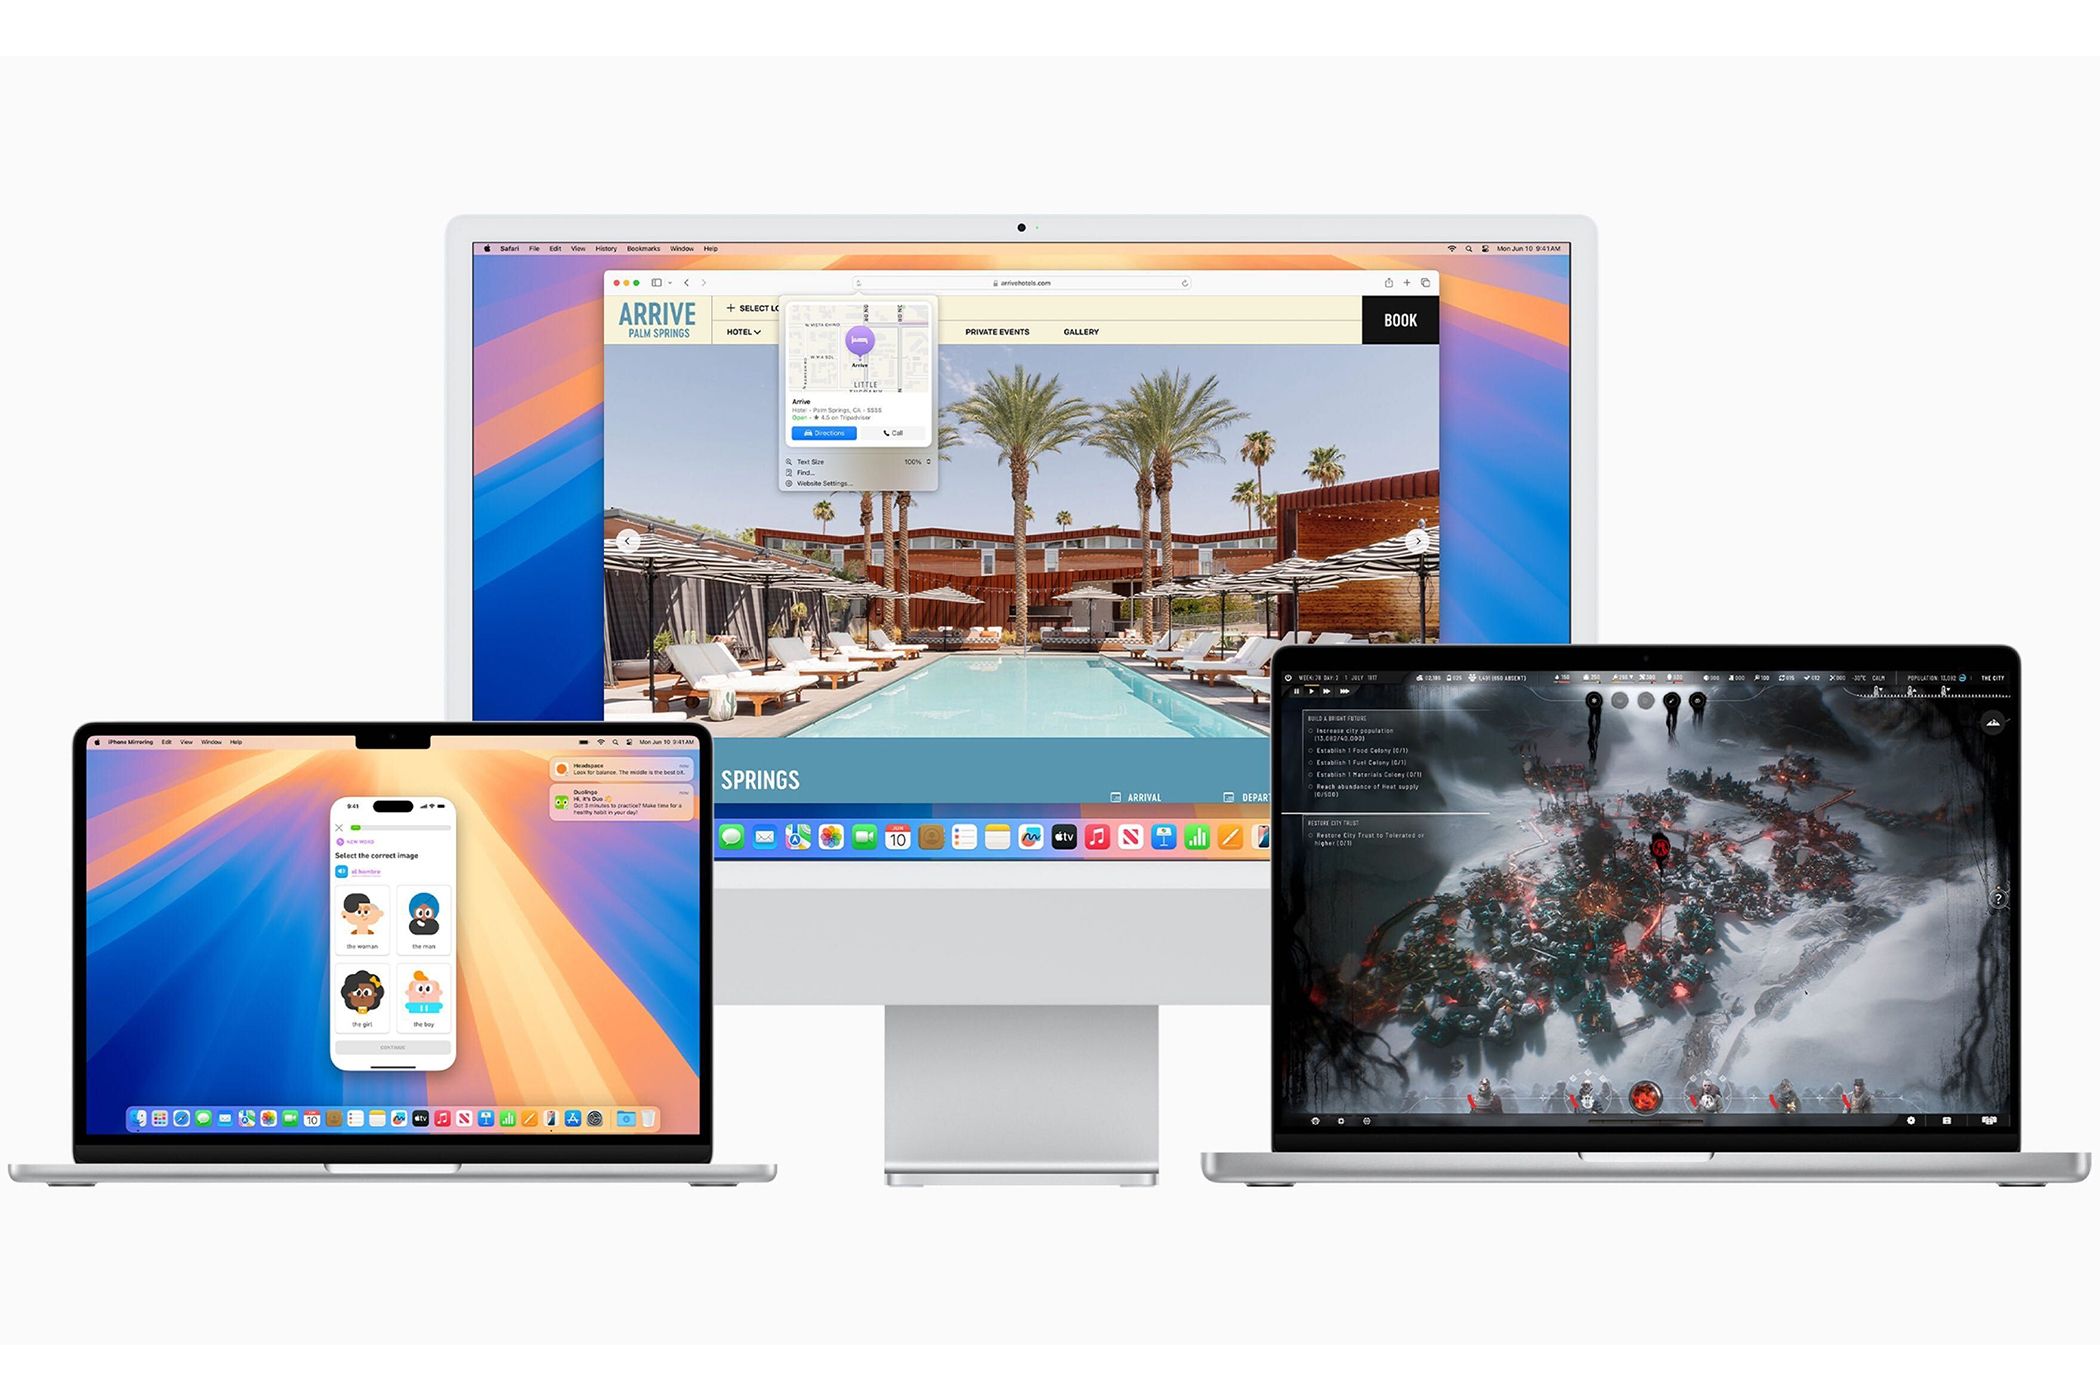 A MacBook Air, MacBook Pro, and iMac running macOS Sequoia